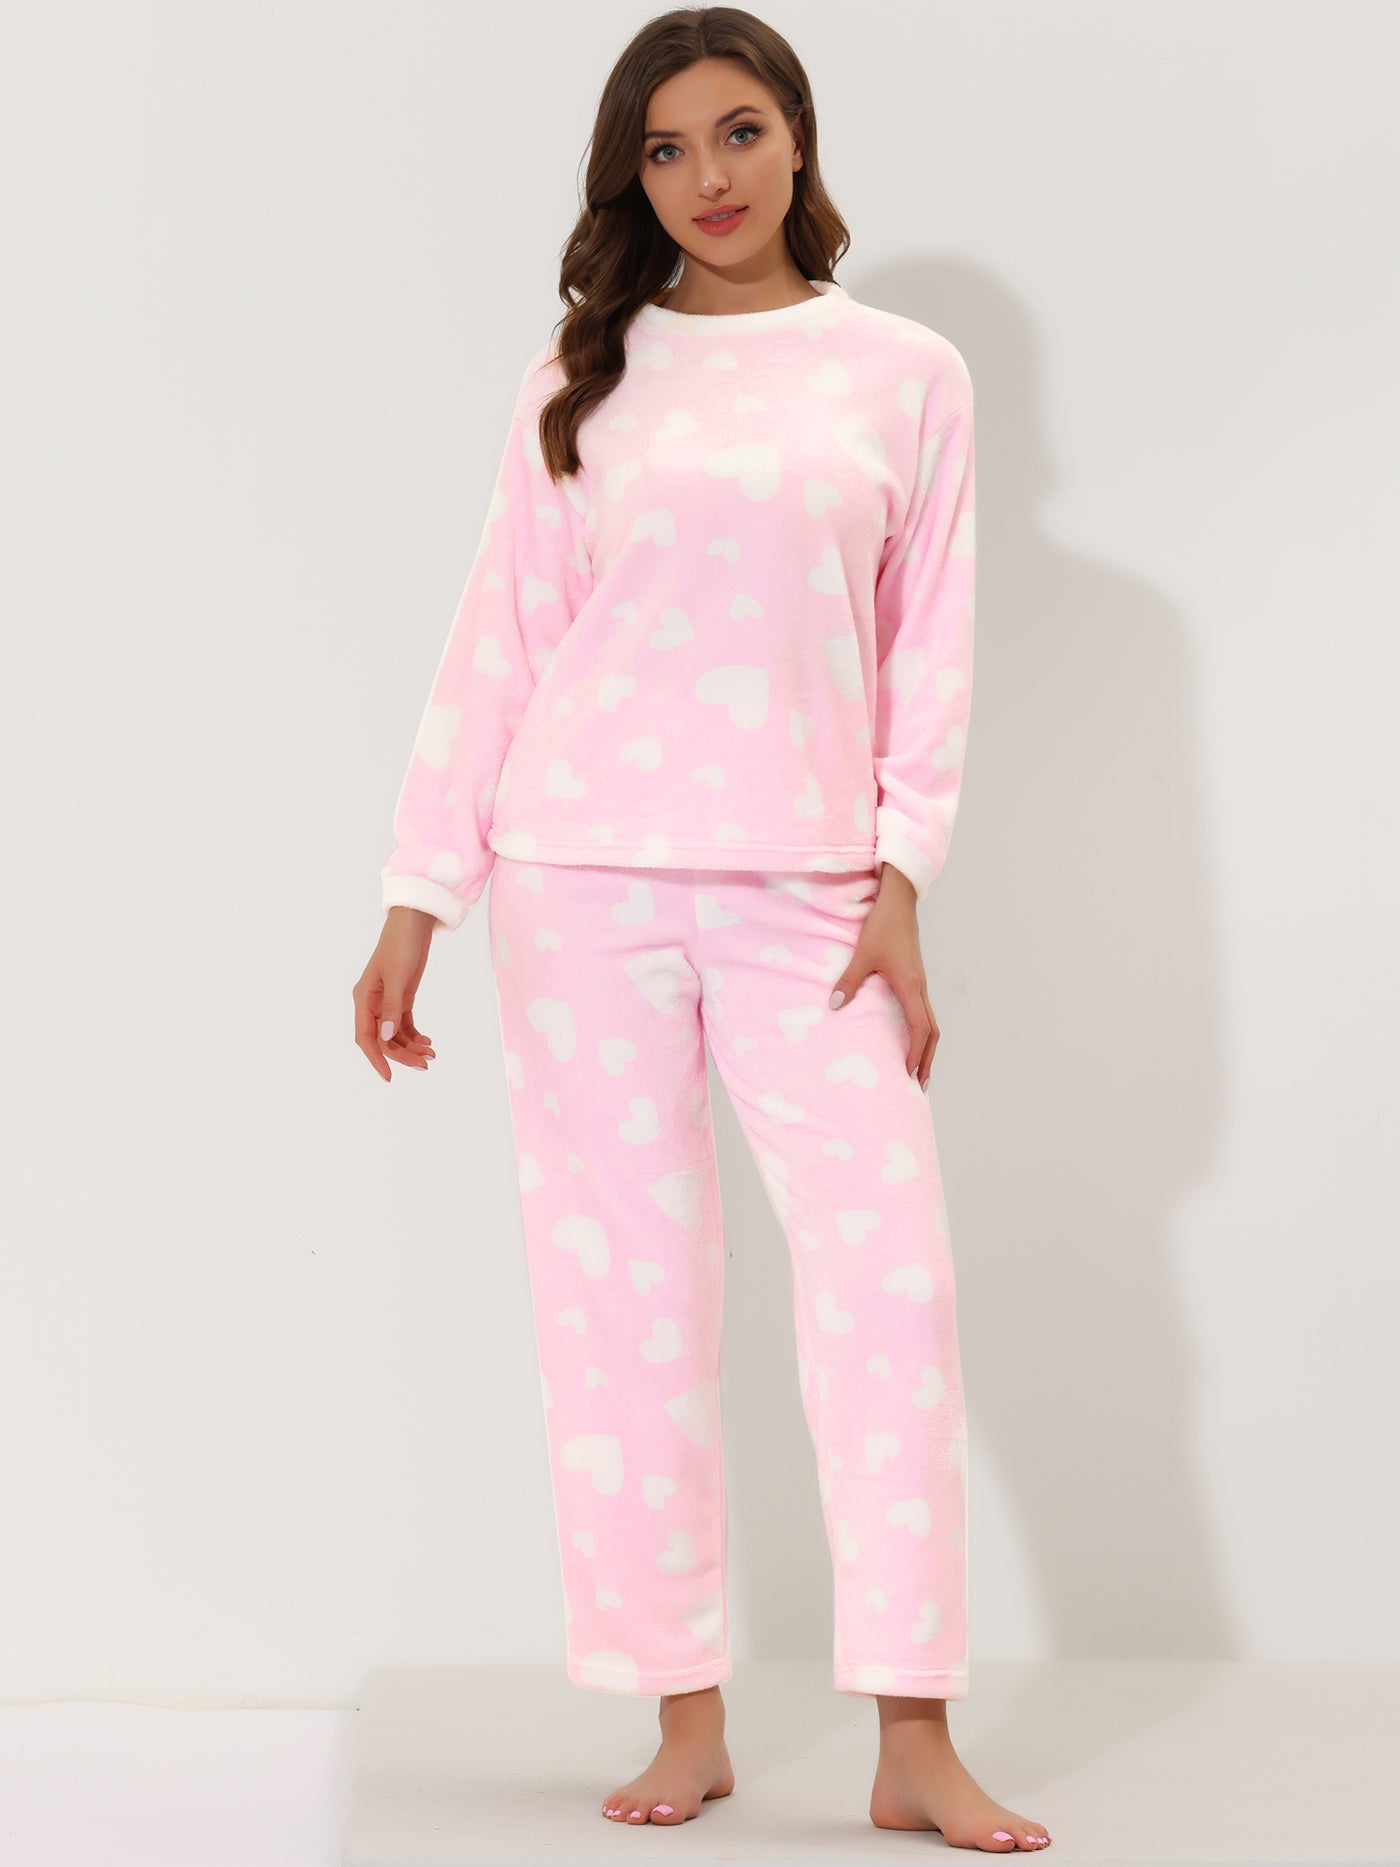 Bublédon Women's Sleepwear Flannel Warm Plush Fleece Pajamas Set